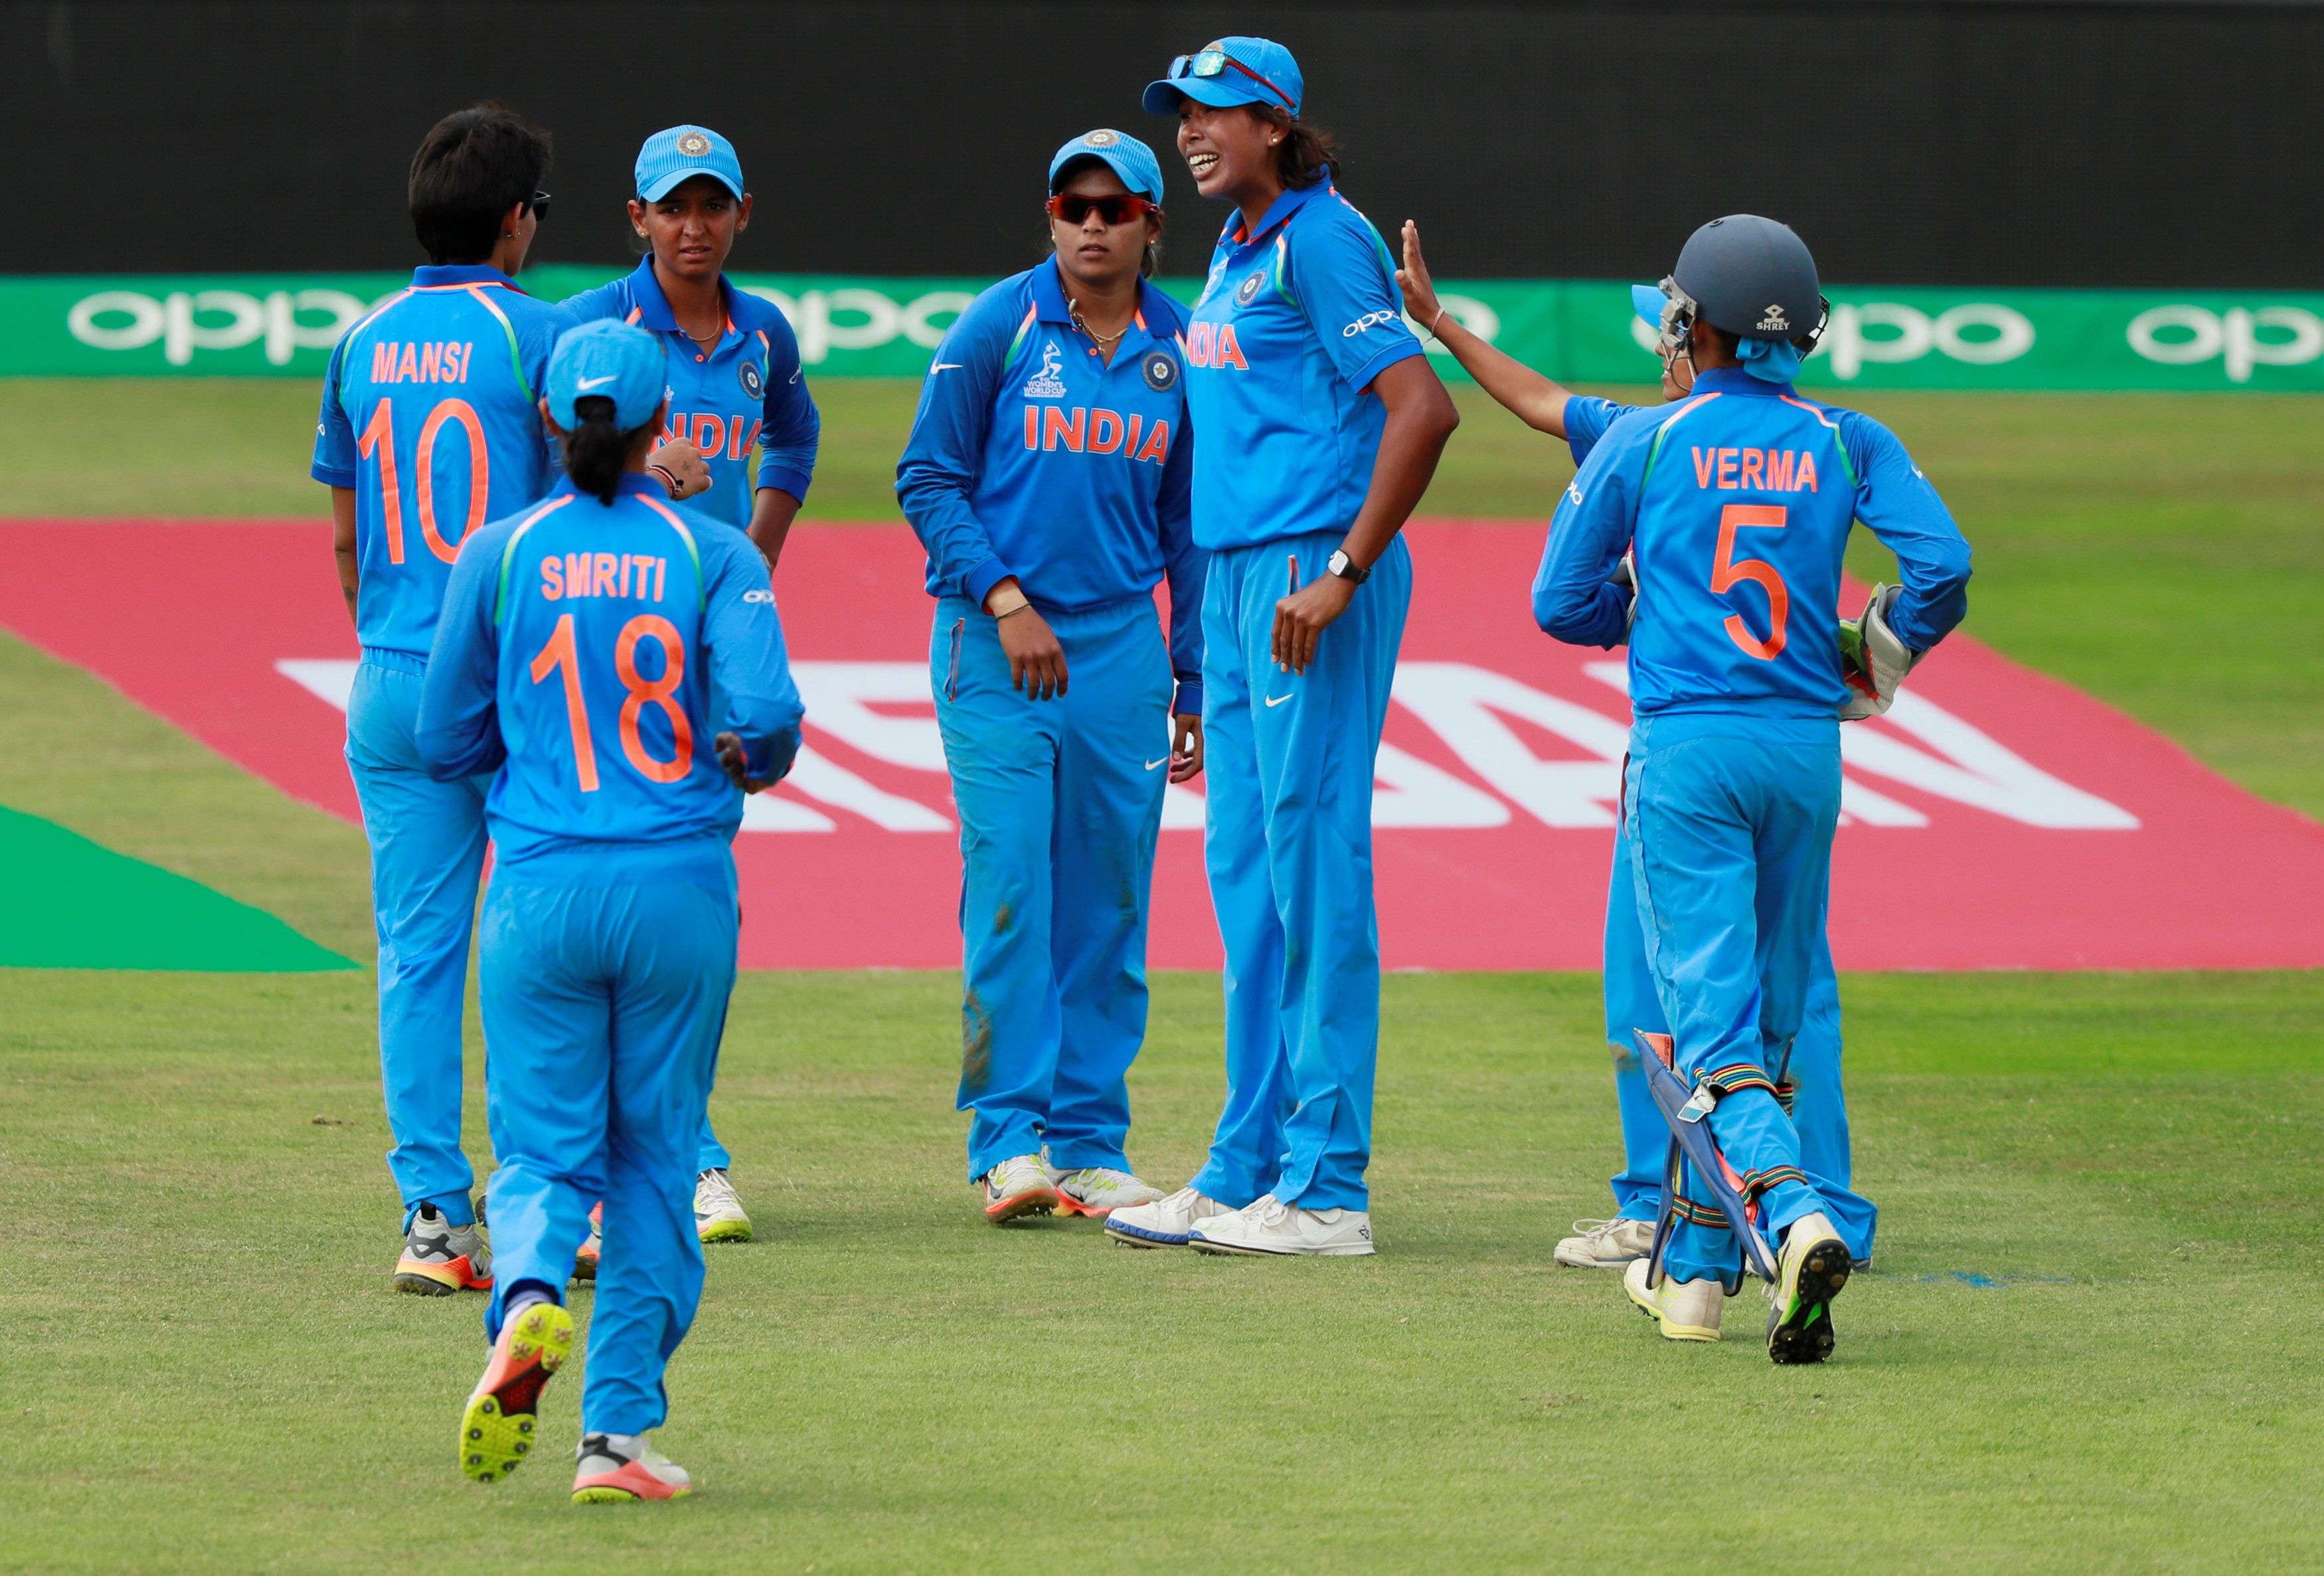 In Pics: ICC Women's World Cup 2017: India inch closer to semi-finals with 16-run win over Sri Lanka